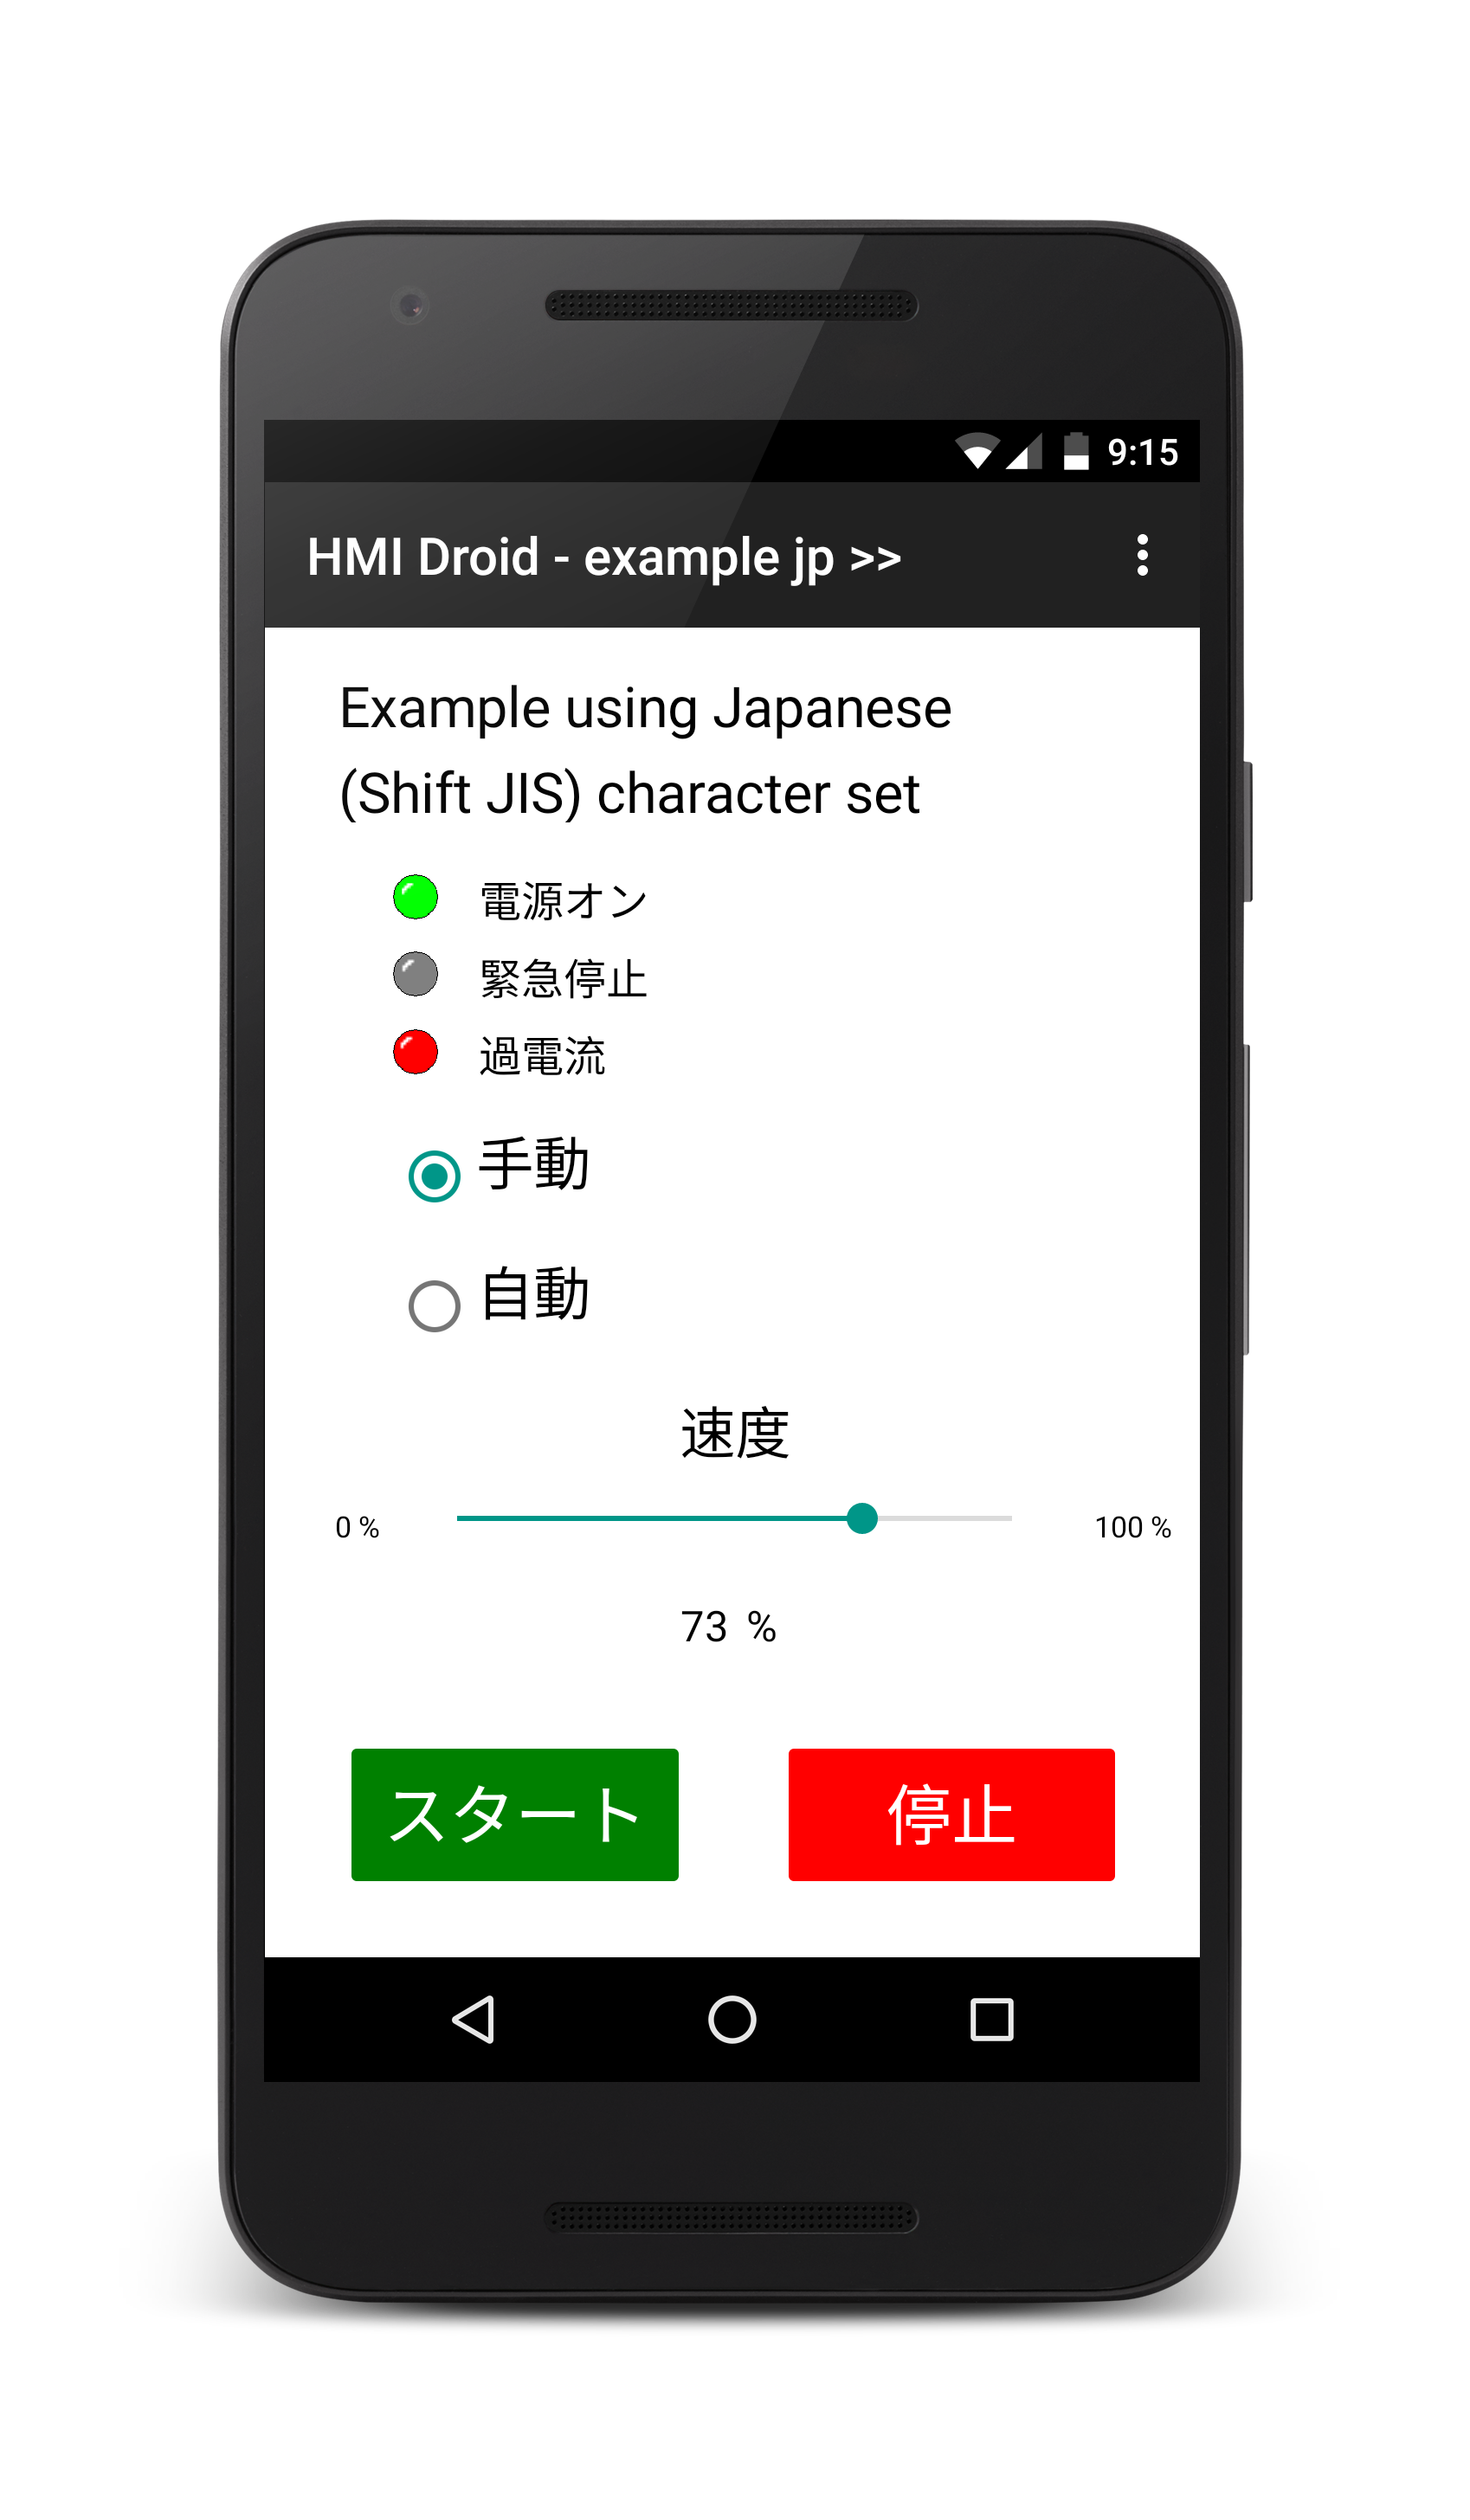 HMI Droid japanese Shift JIS character set